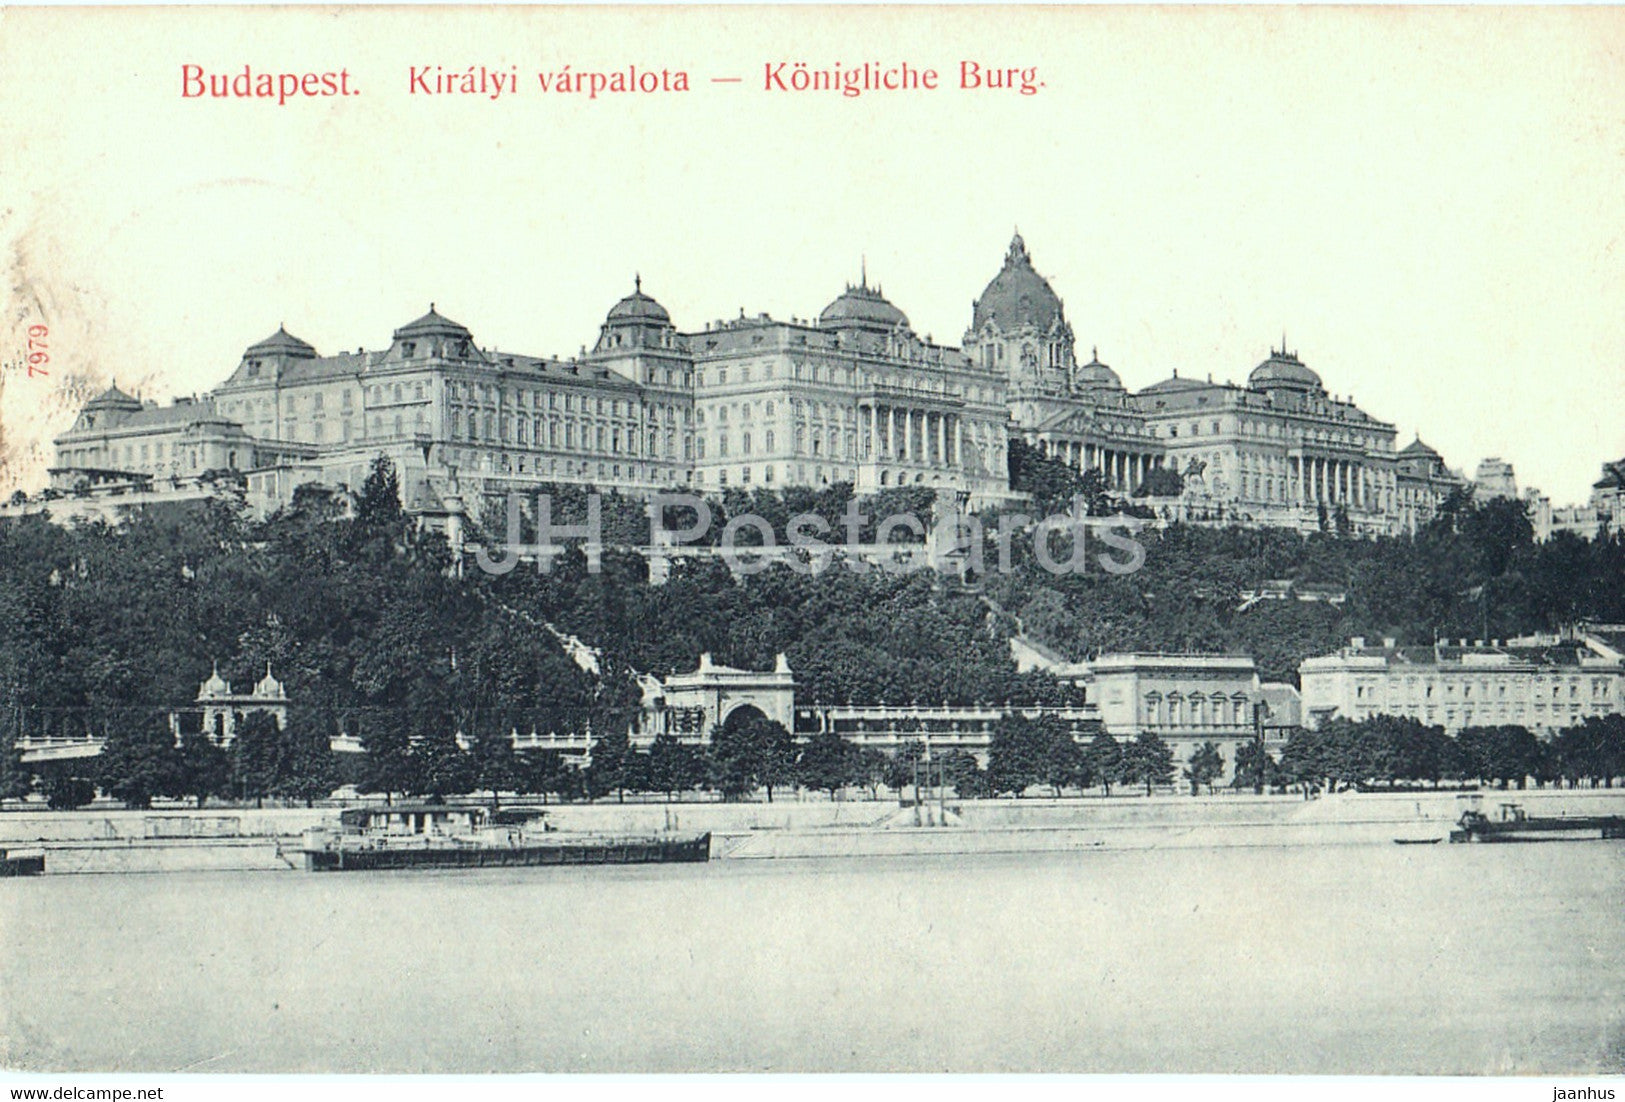 Budapest - Kiralyi varpalota - Konigliche Burg - old postcard - 1909 - Hungary - used - JH Postcards